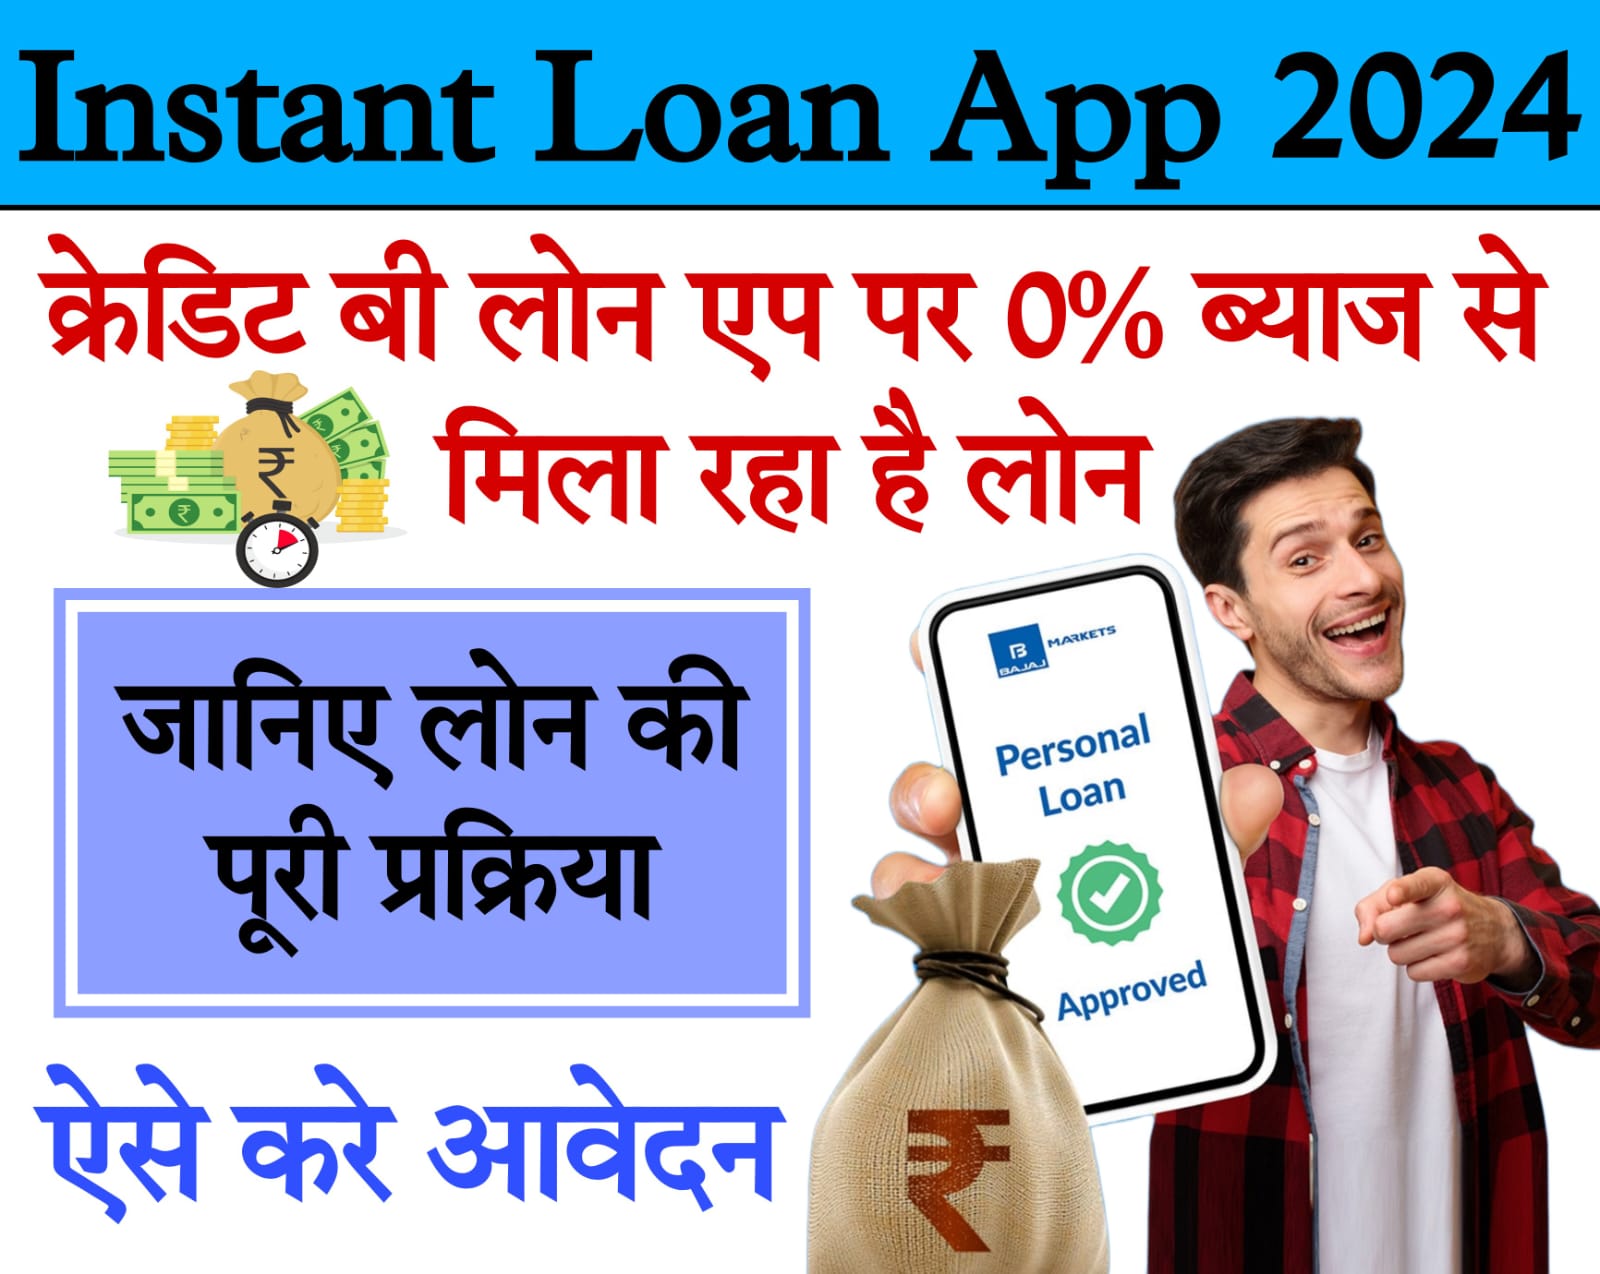 turant loan app